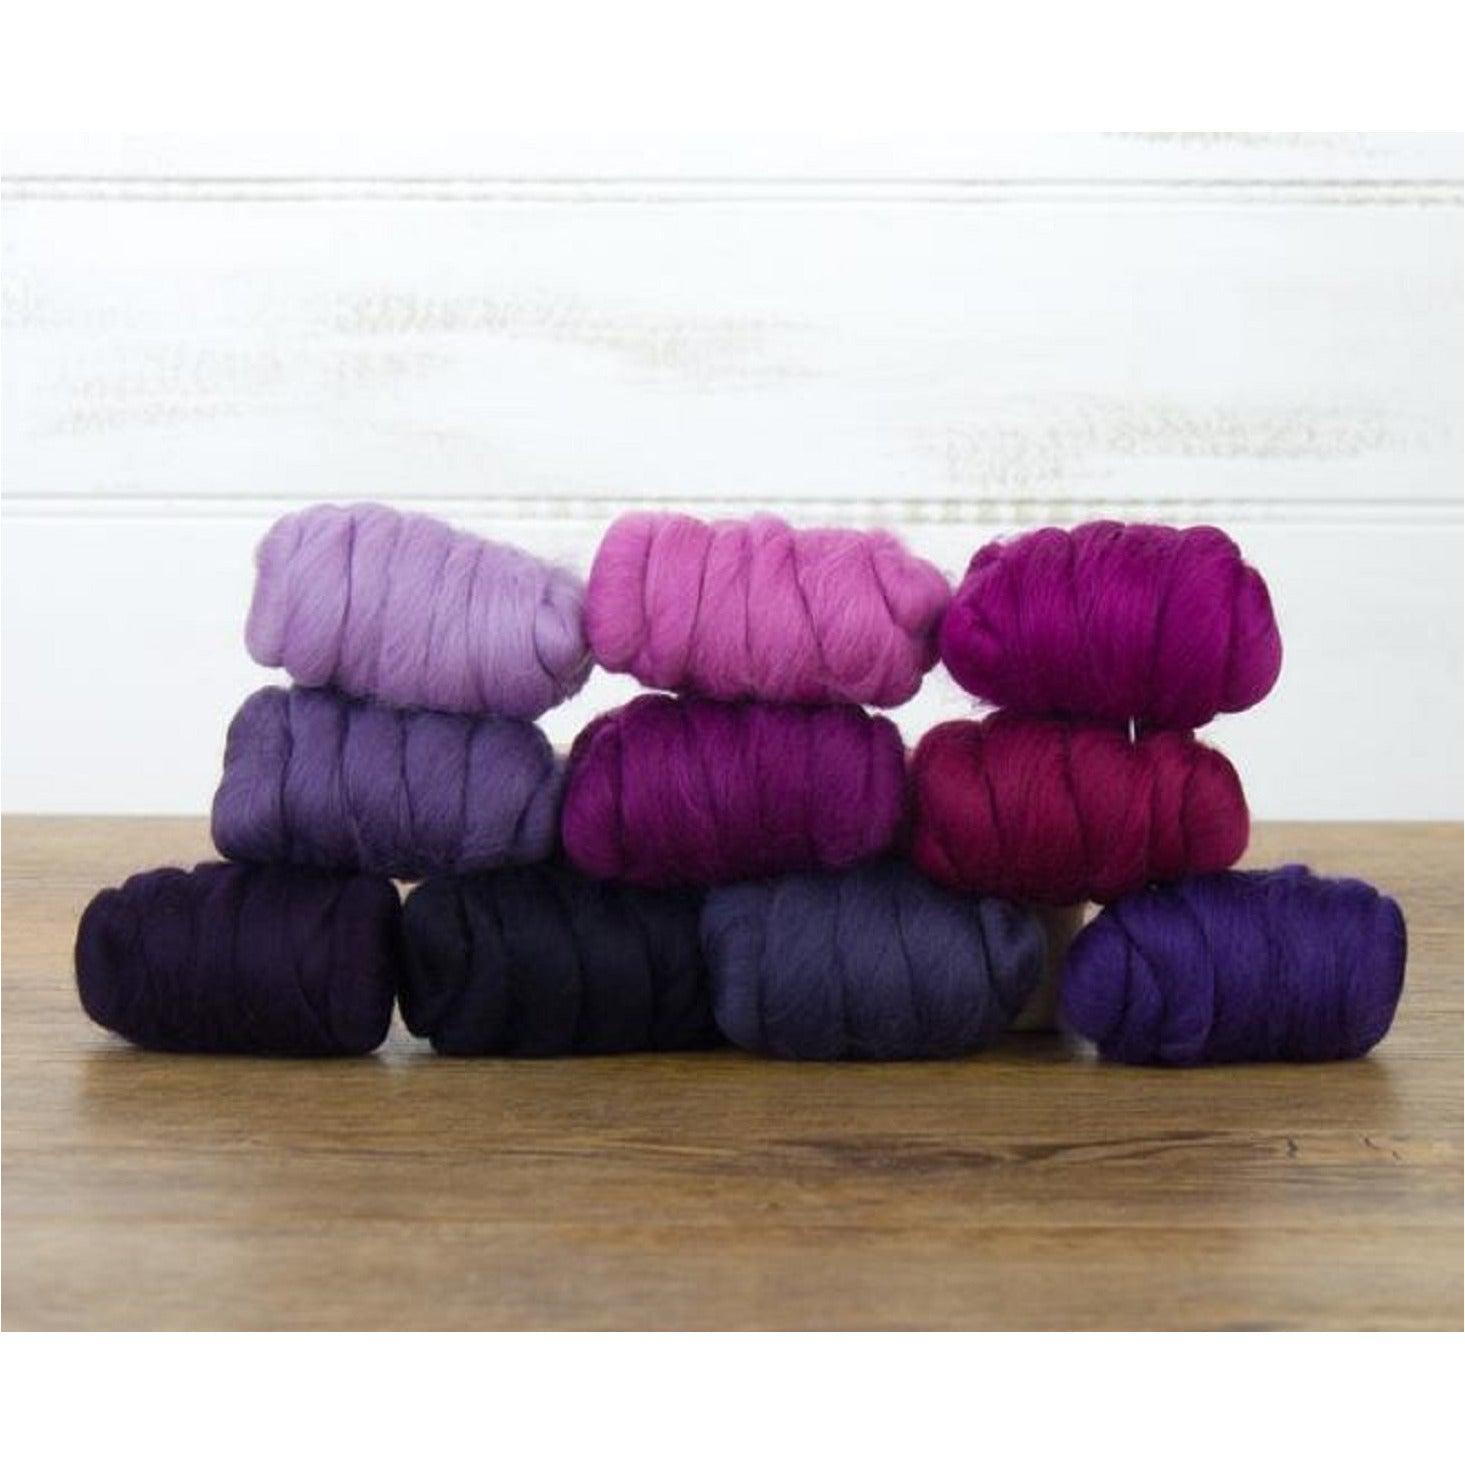 Mixed Merino Wool Variety Pack | Very Berry (Purples) 250 Grams, 23 Micron - Textile Indie 